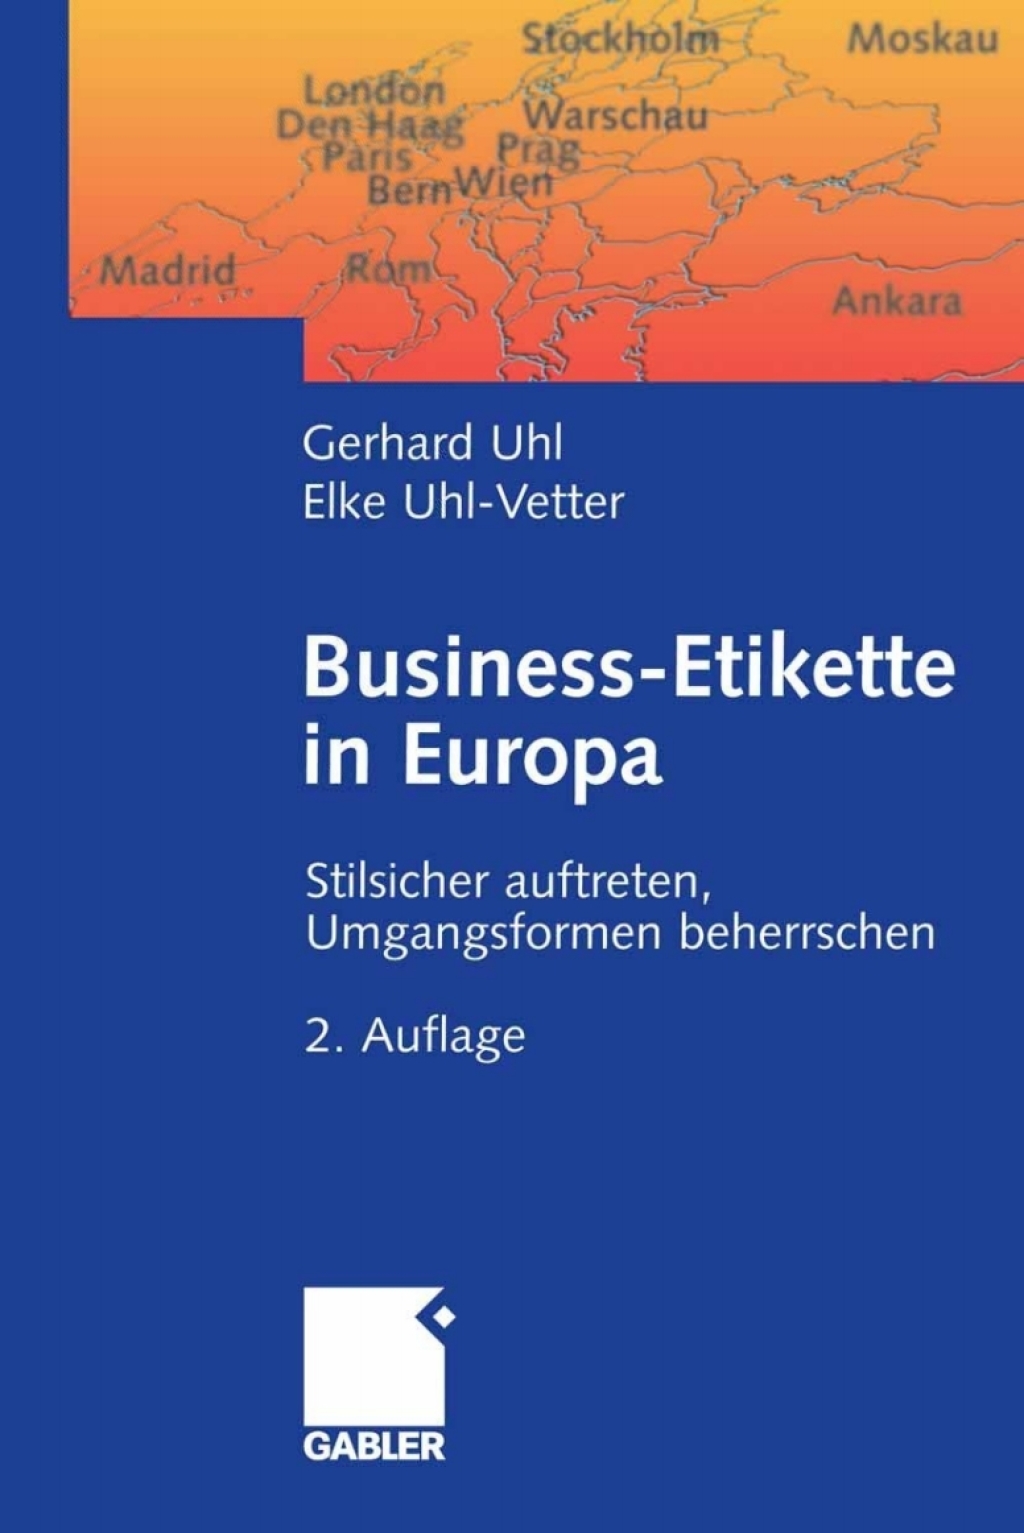 Business-Etikette in Europa - 2nd Edition (eBook)